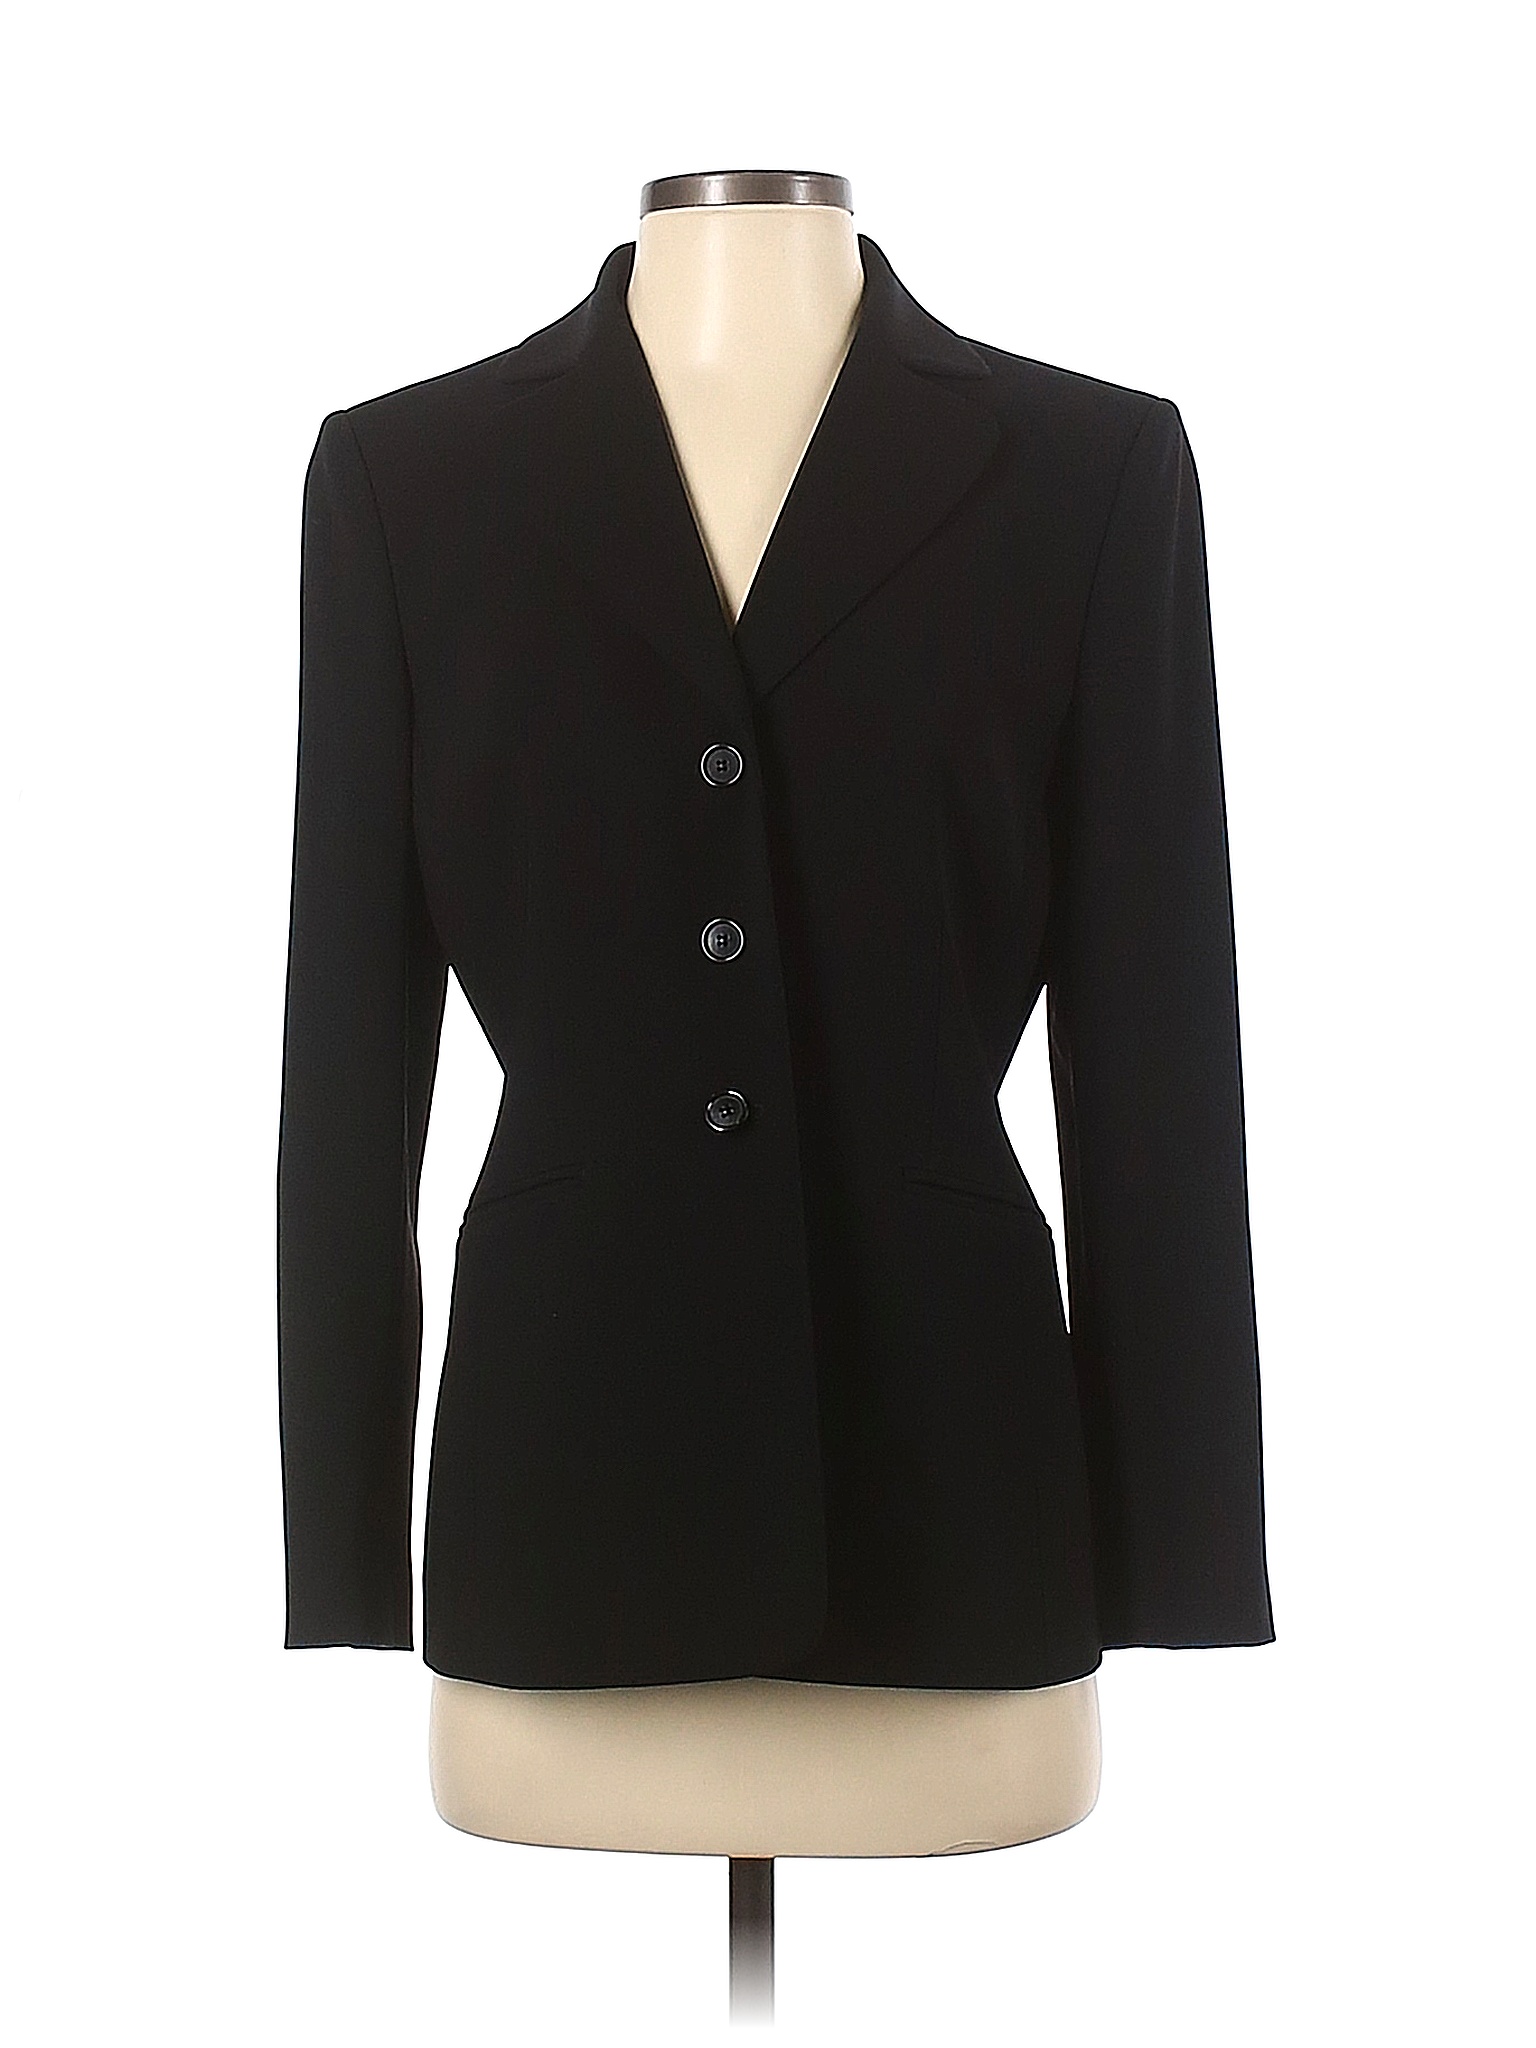 Ann Taylor Solid Black Blazer Size 8 (Petite) - 88% off | thredUP